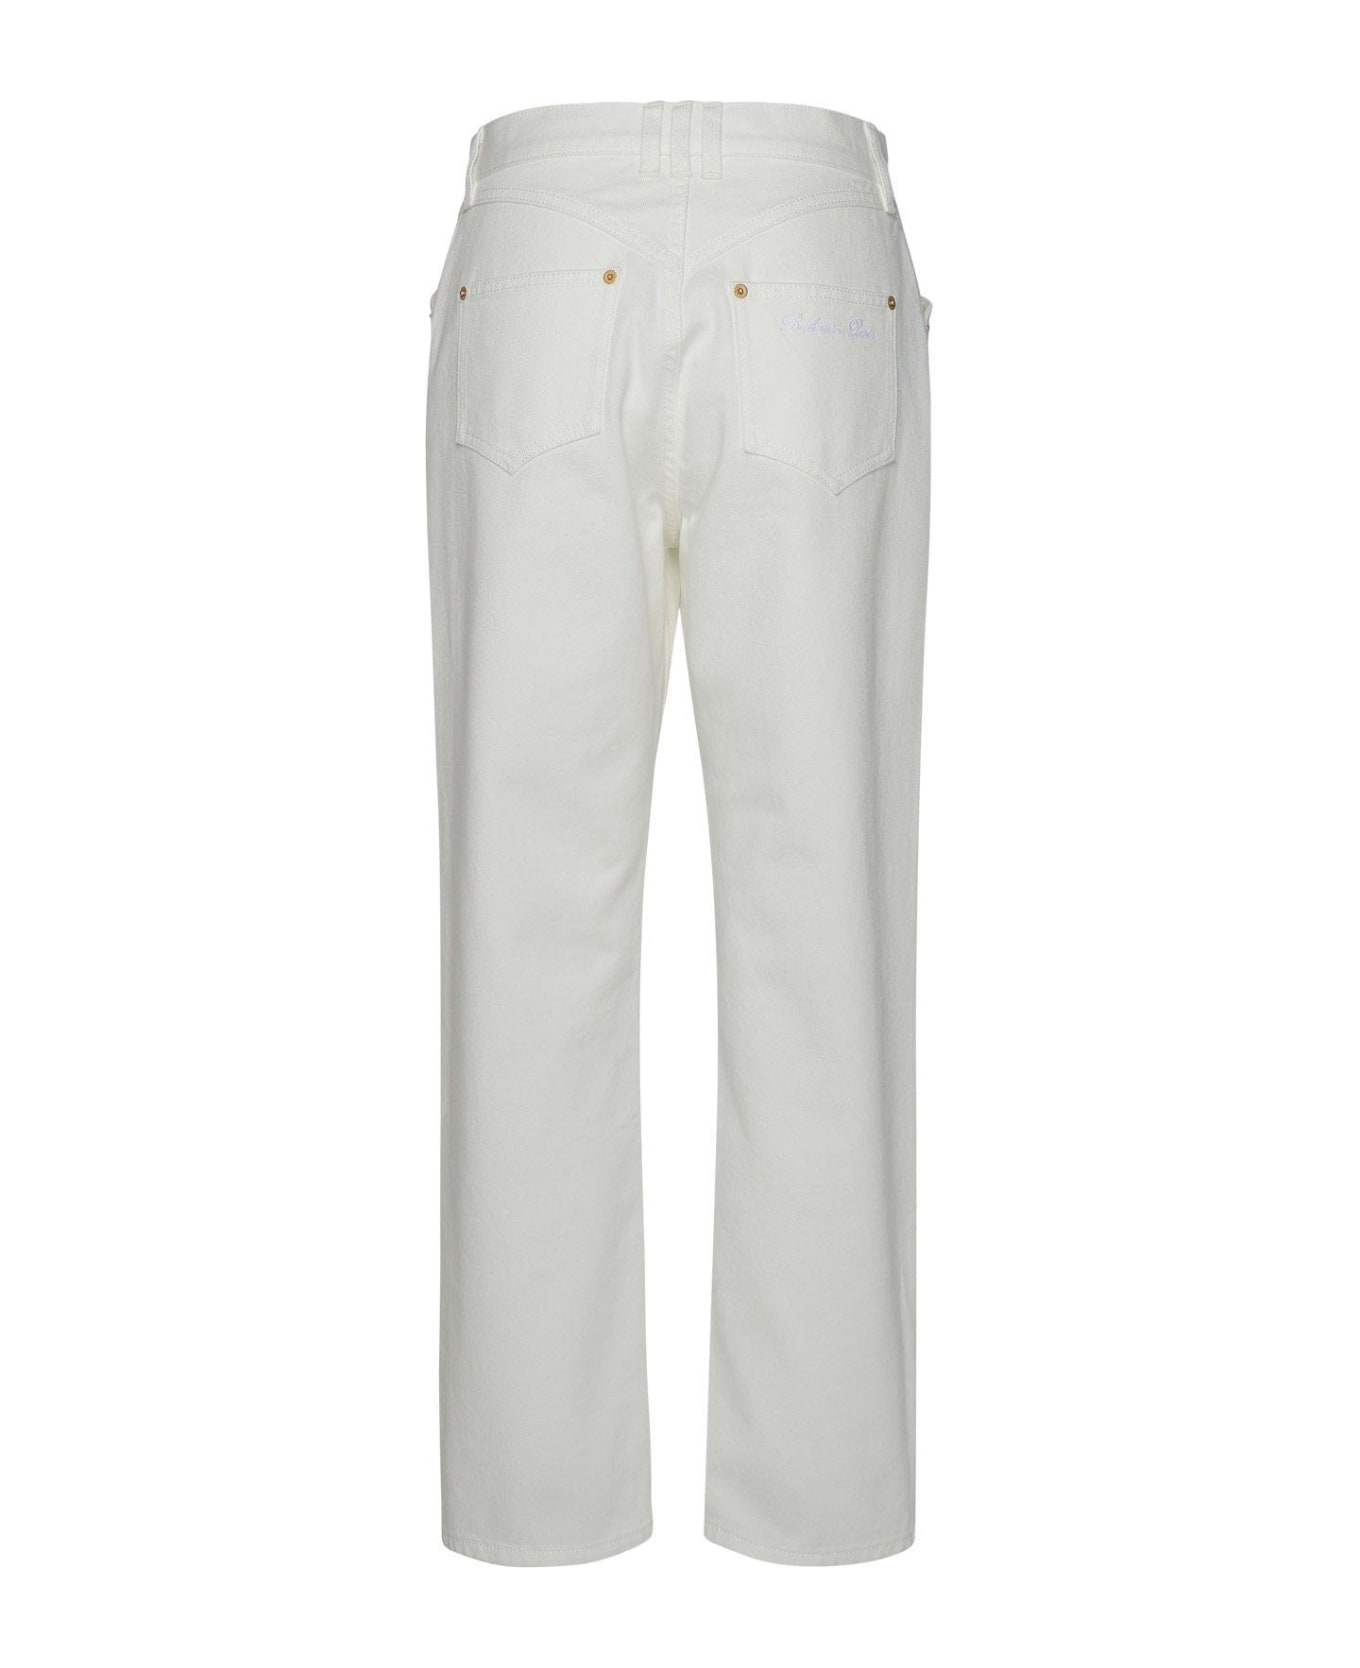 Balmain Classic Jeans - White ボトムス